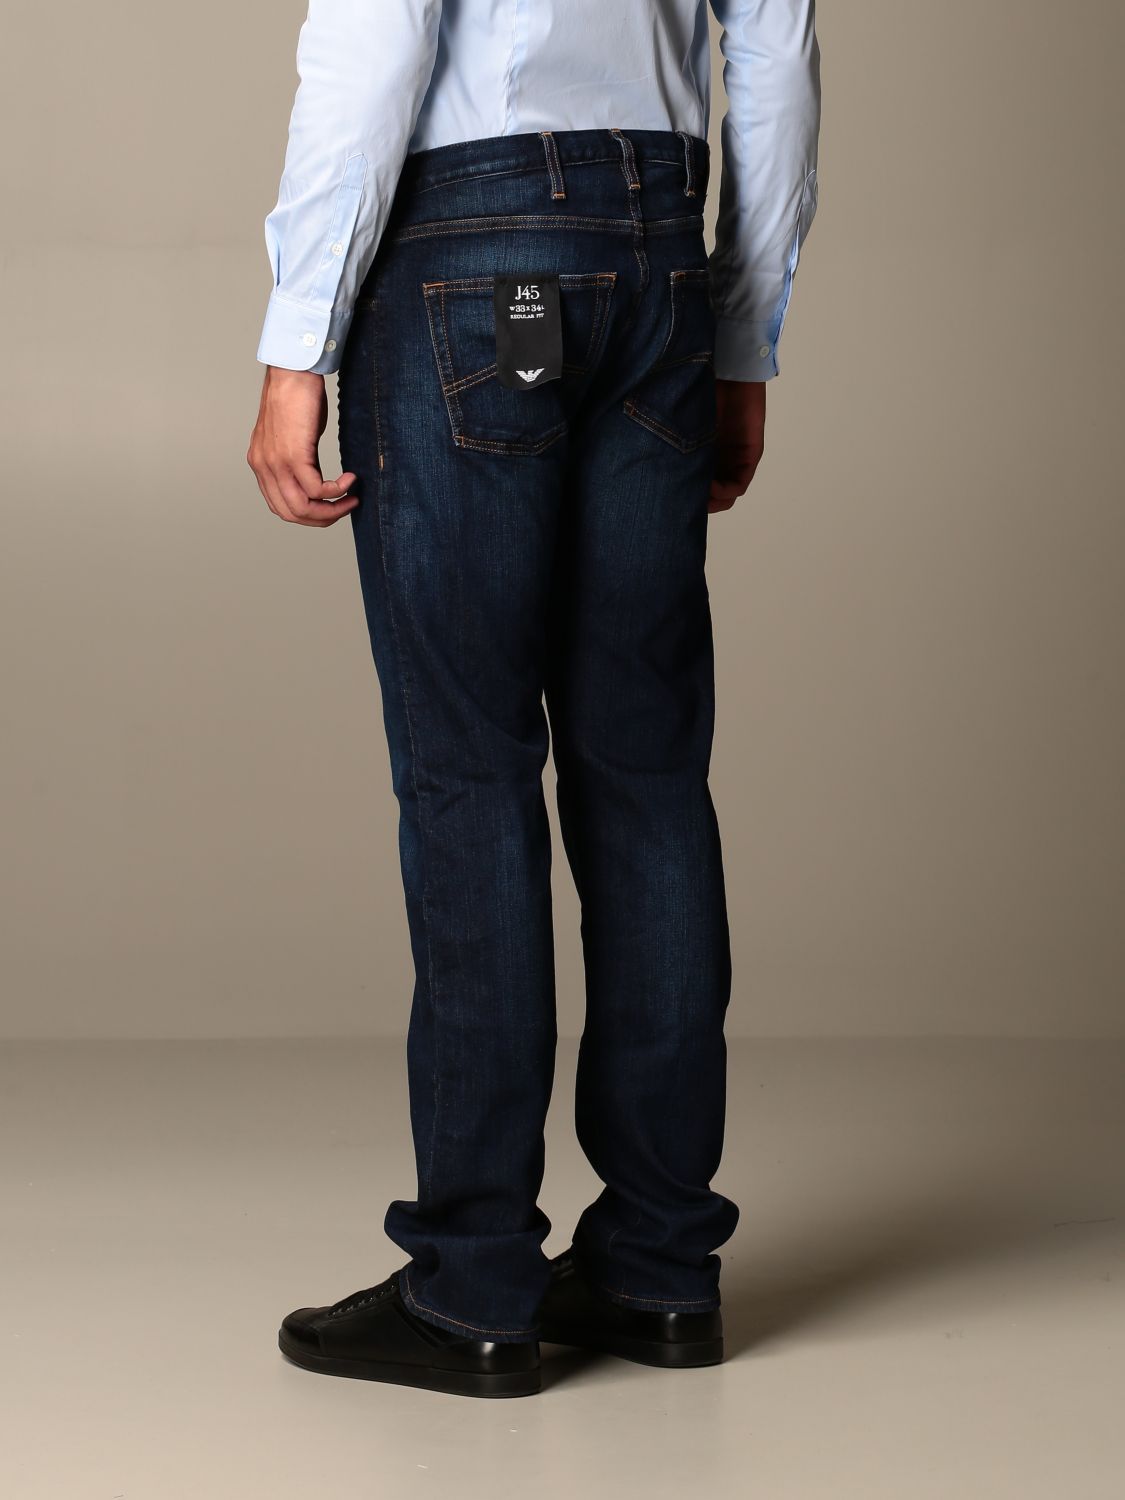 Outlet de Emporio Armani: Jeans para hombre, Denim | Jeans Emporio Armani 8N1J45 1V0LZ en línea GIGLIO.COM